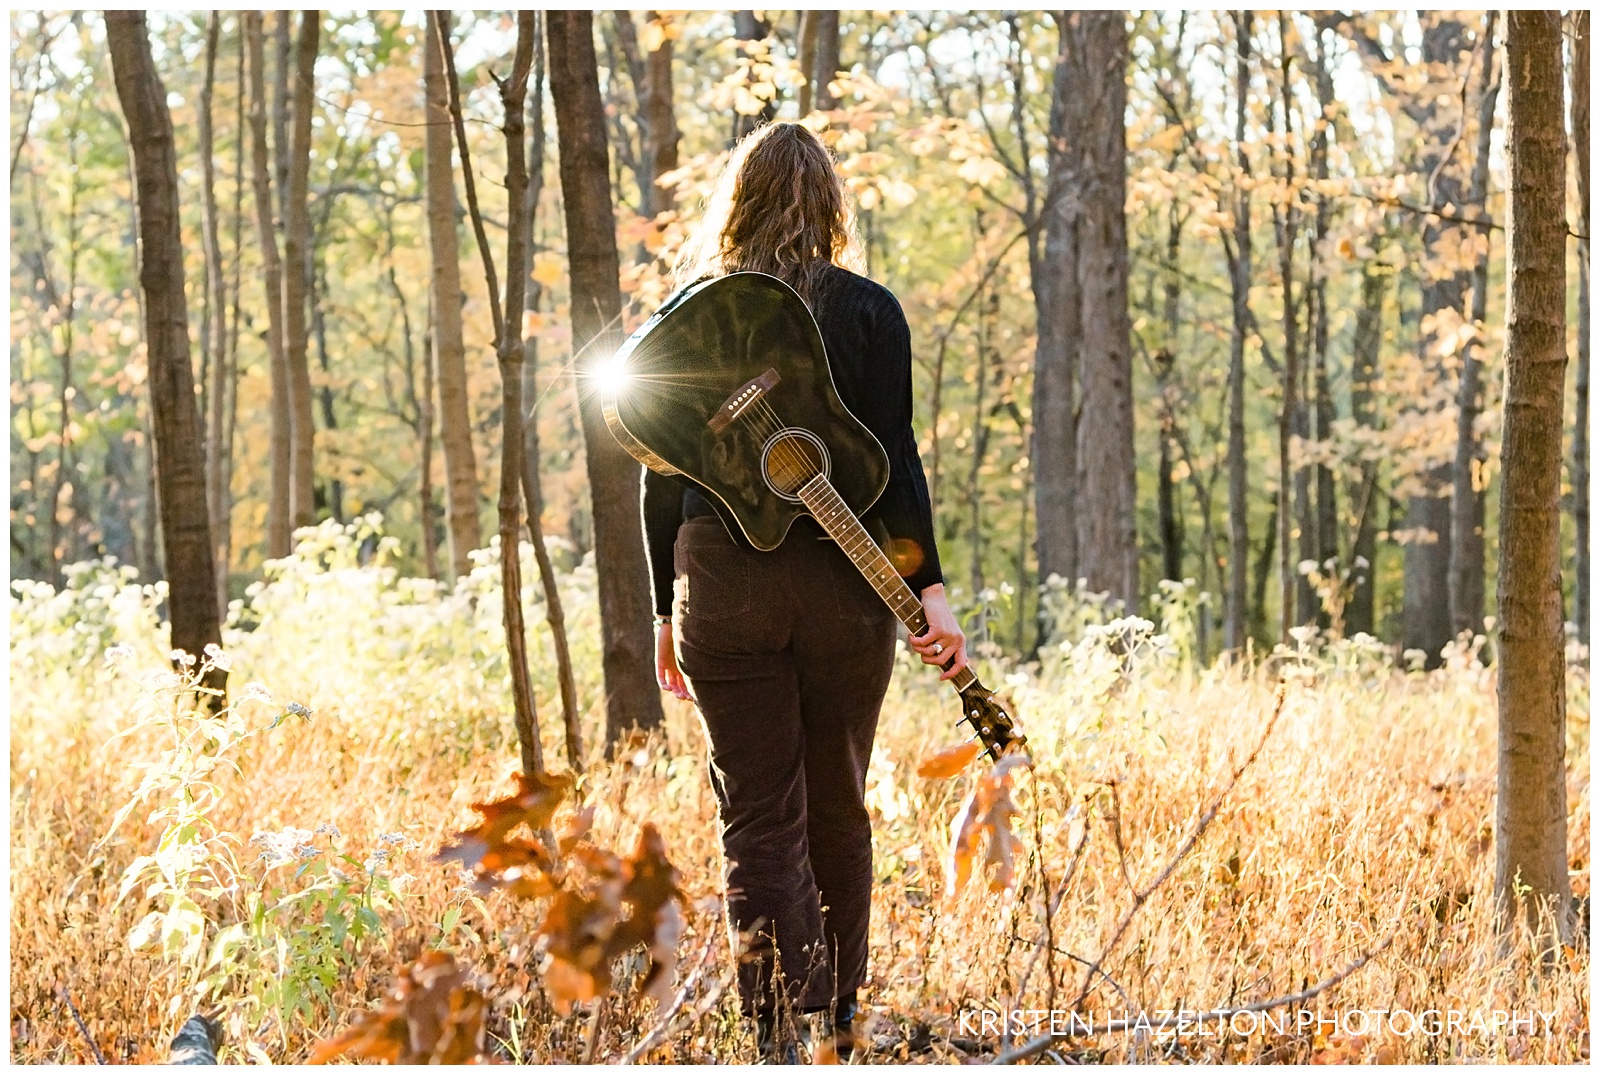 Senior portraits with a guitar at Thatcher Woods in River Forest, IL by Oak Park senior photographer Kristen Hazelton